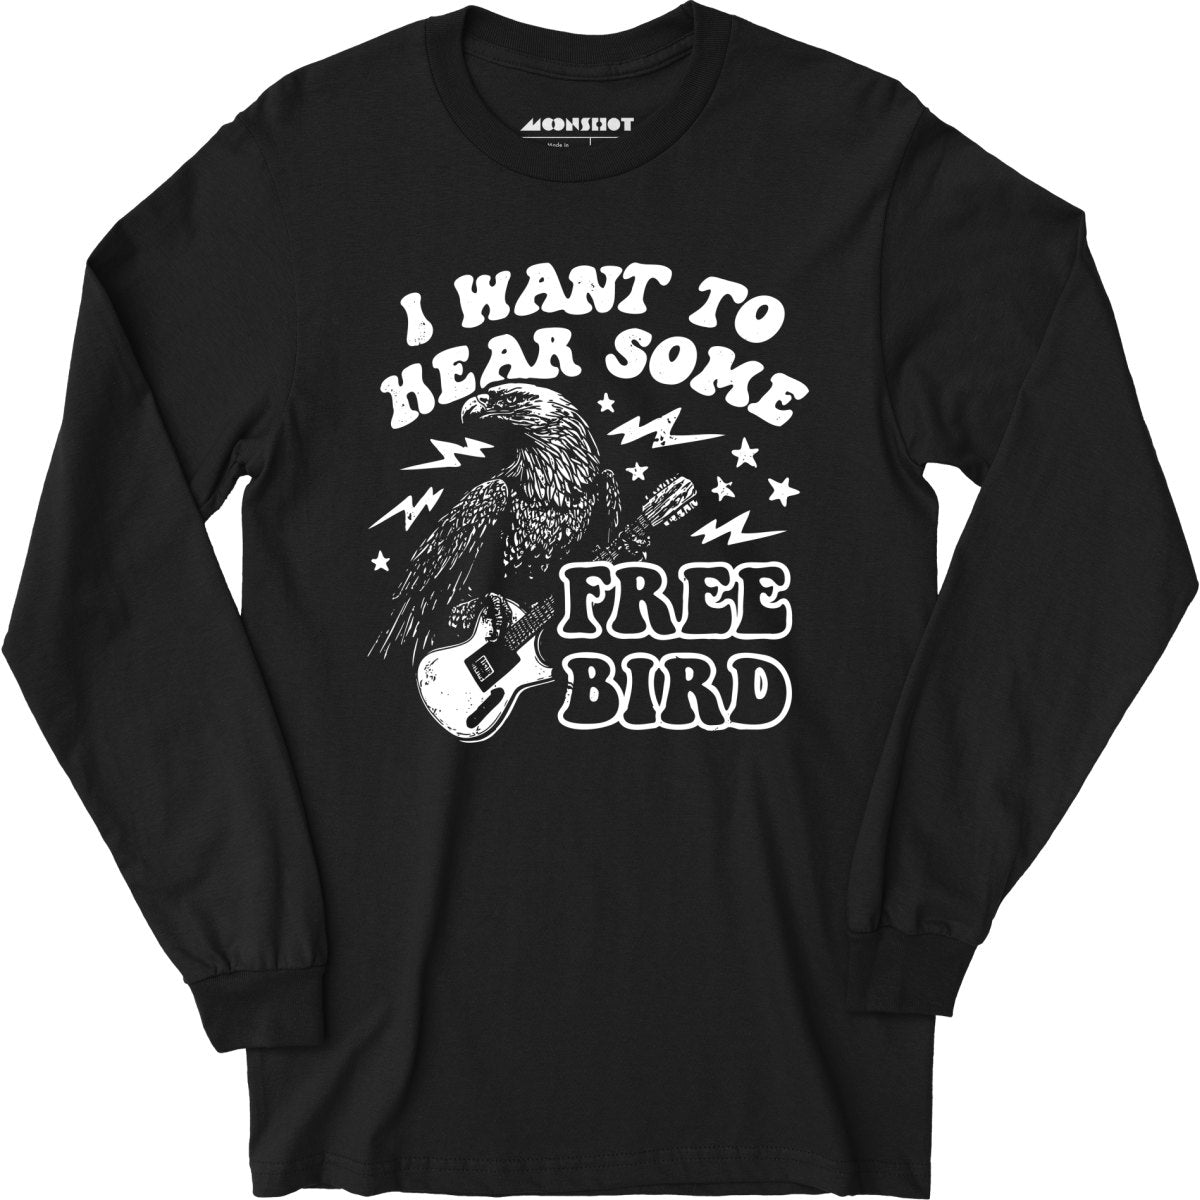 I Want to Hear Some Free Bird - Long Sleeve T-Shirt